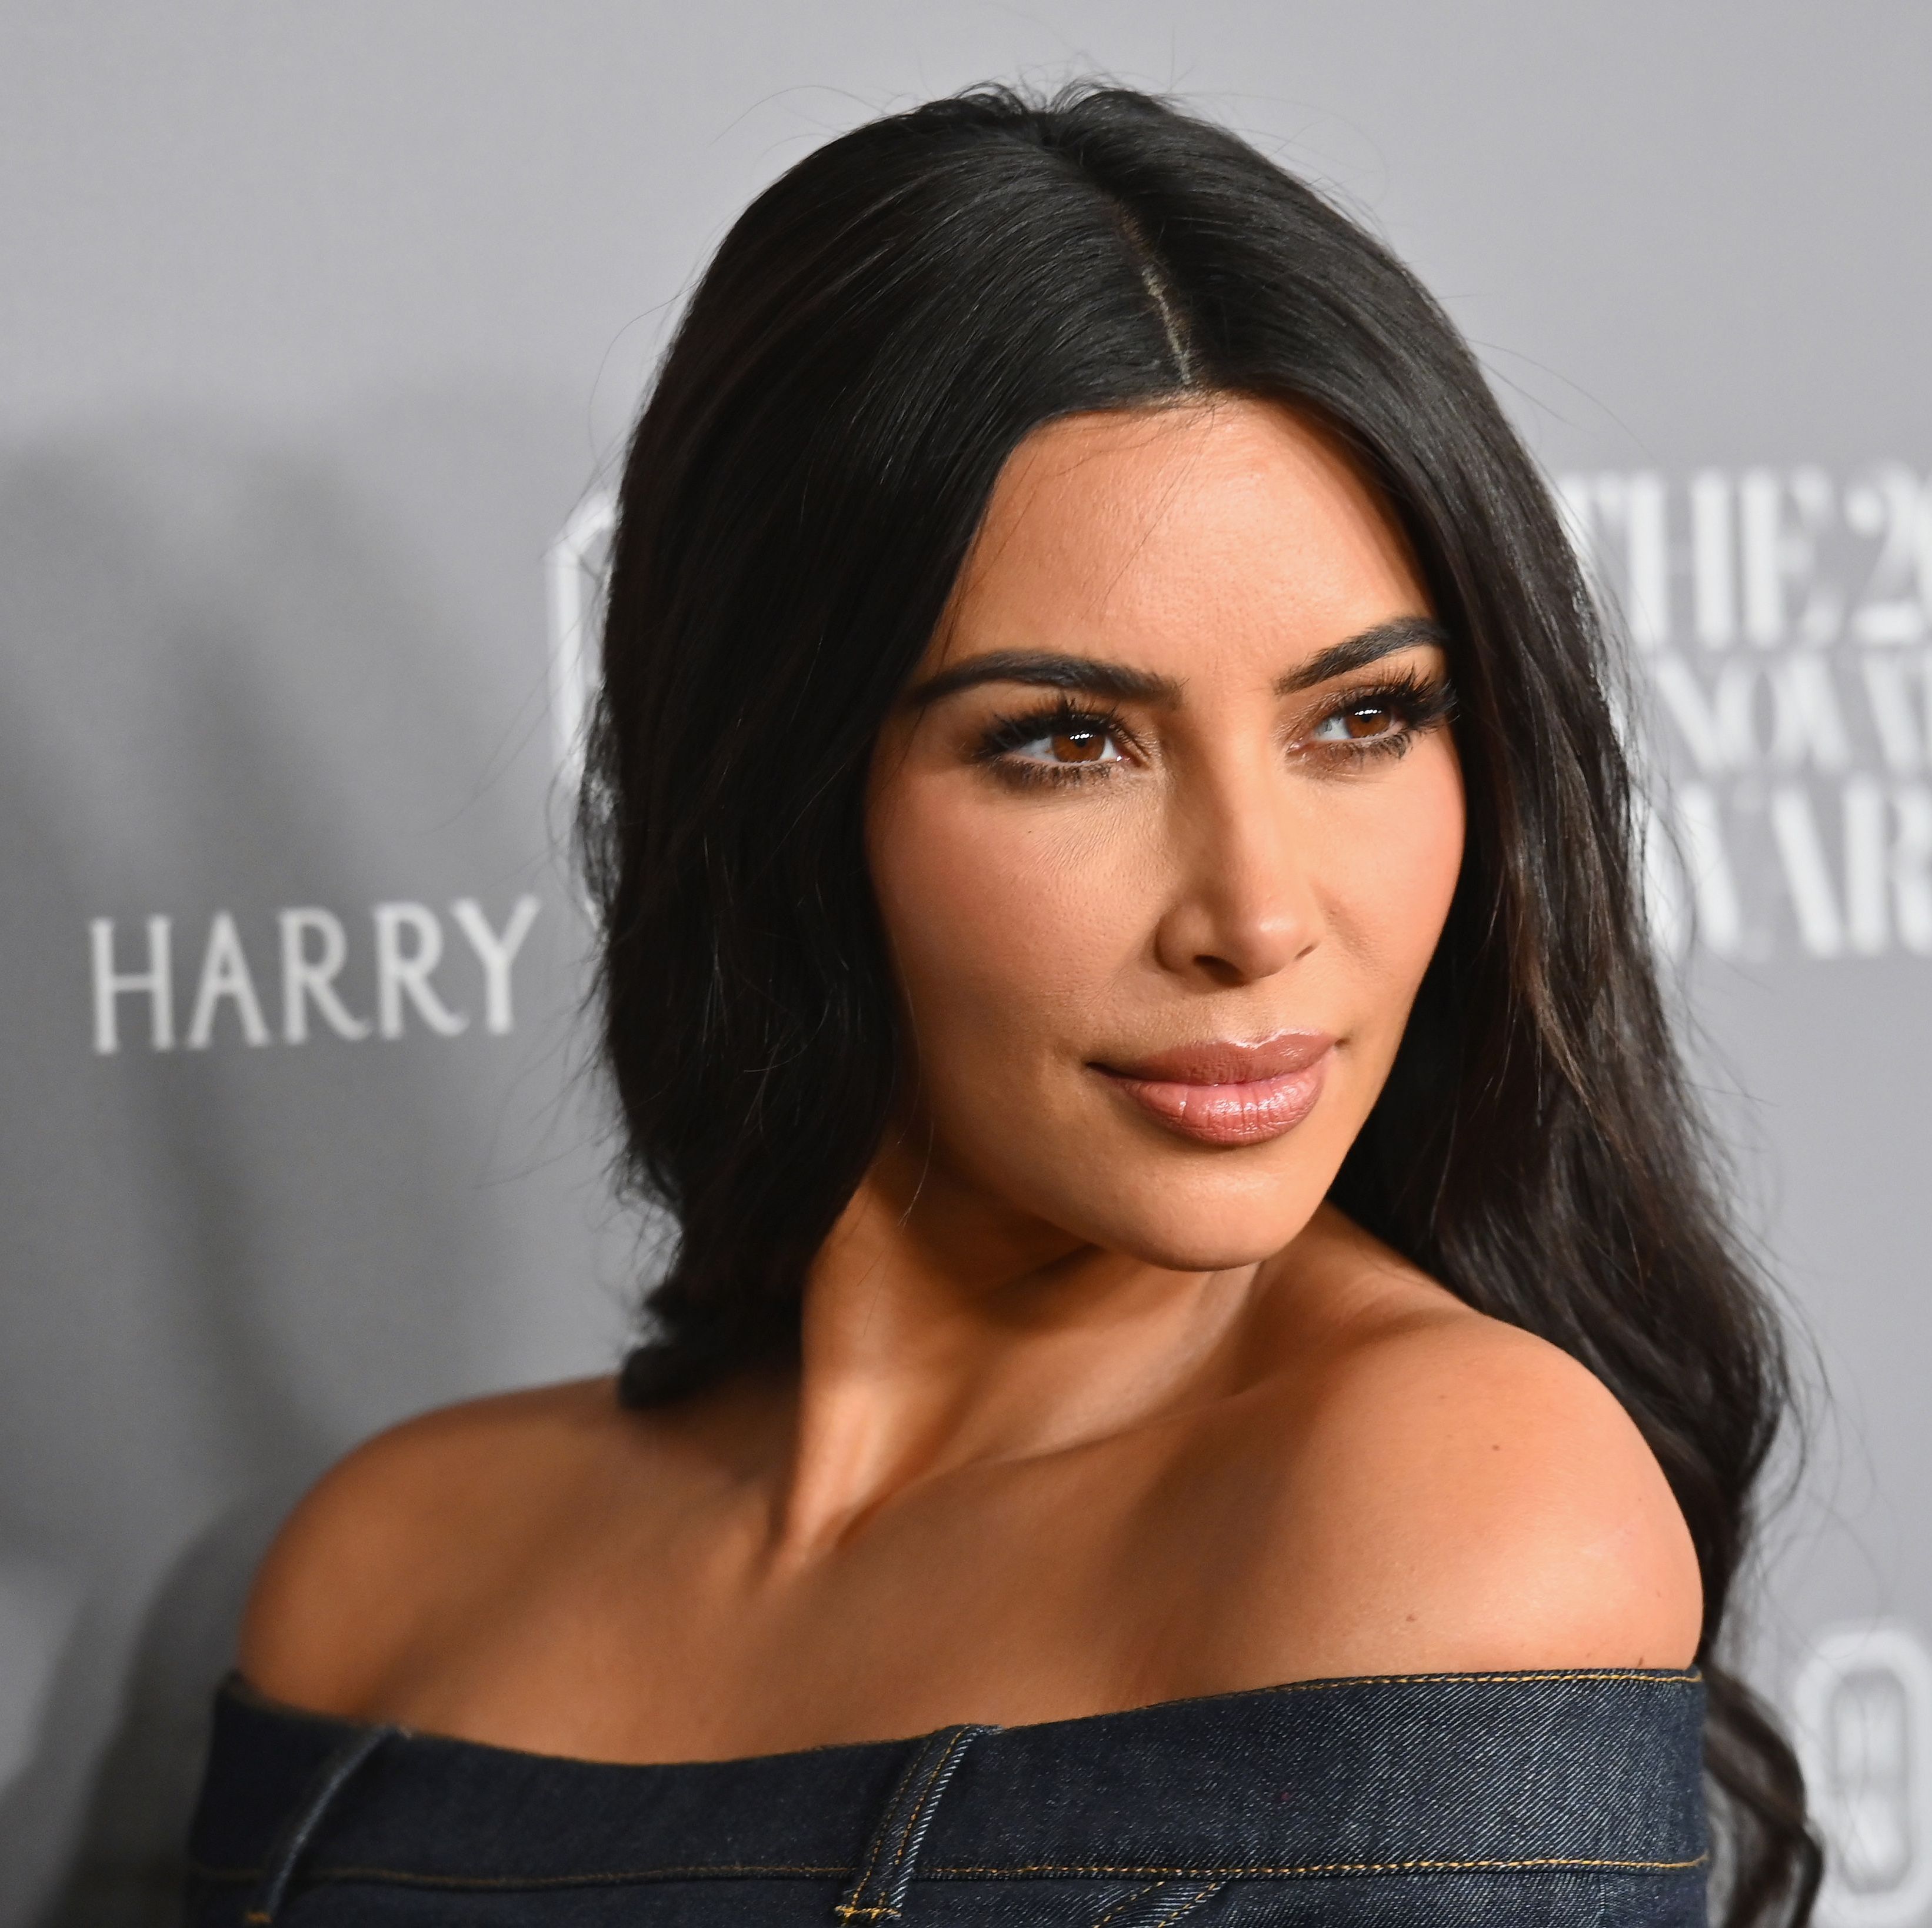 abhi tyagi recommends Does Kim Kardashian Like Anal Sex